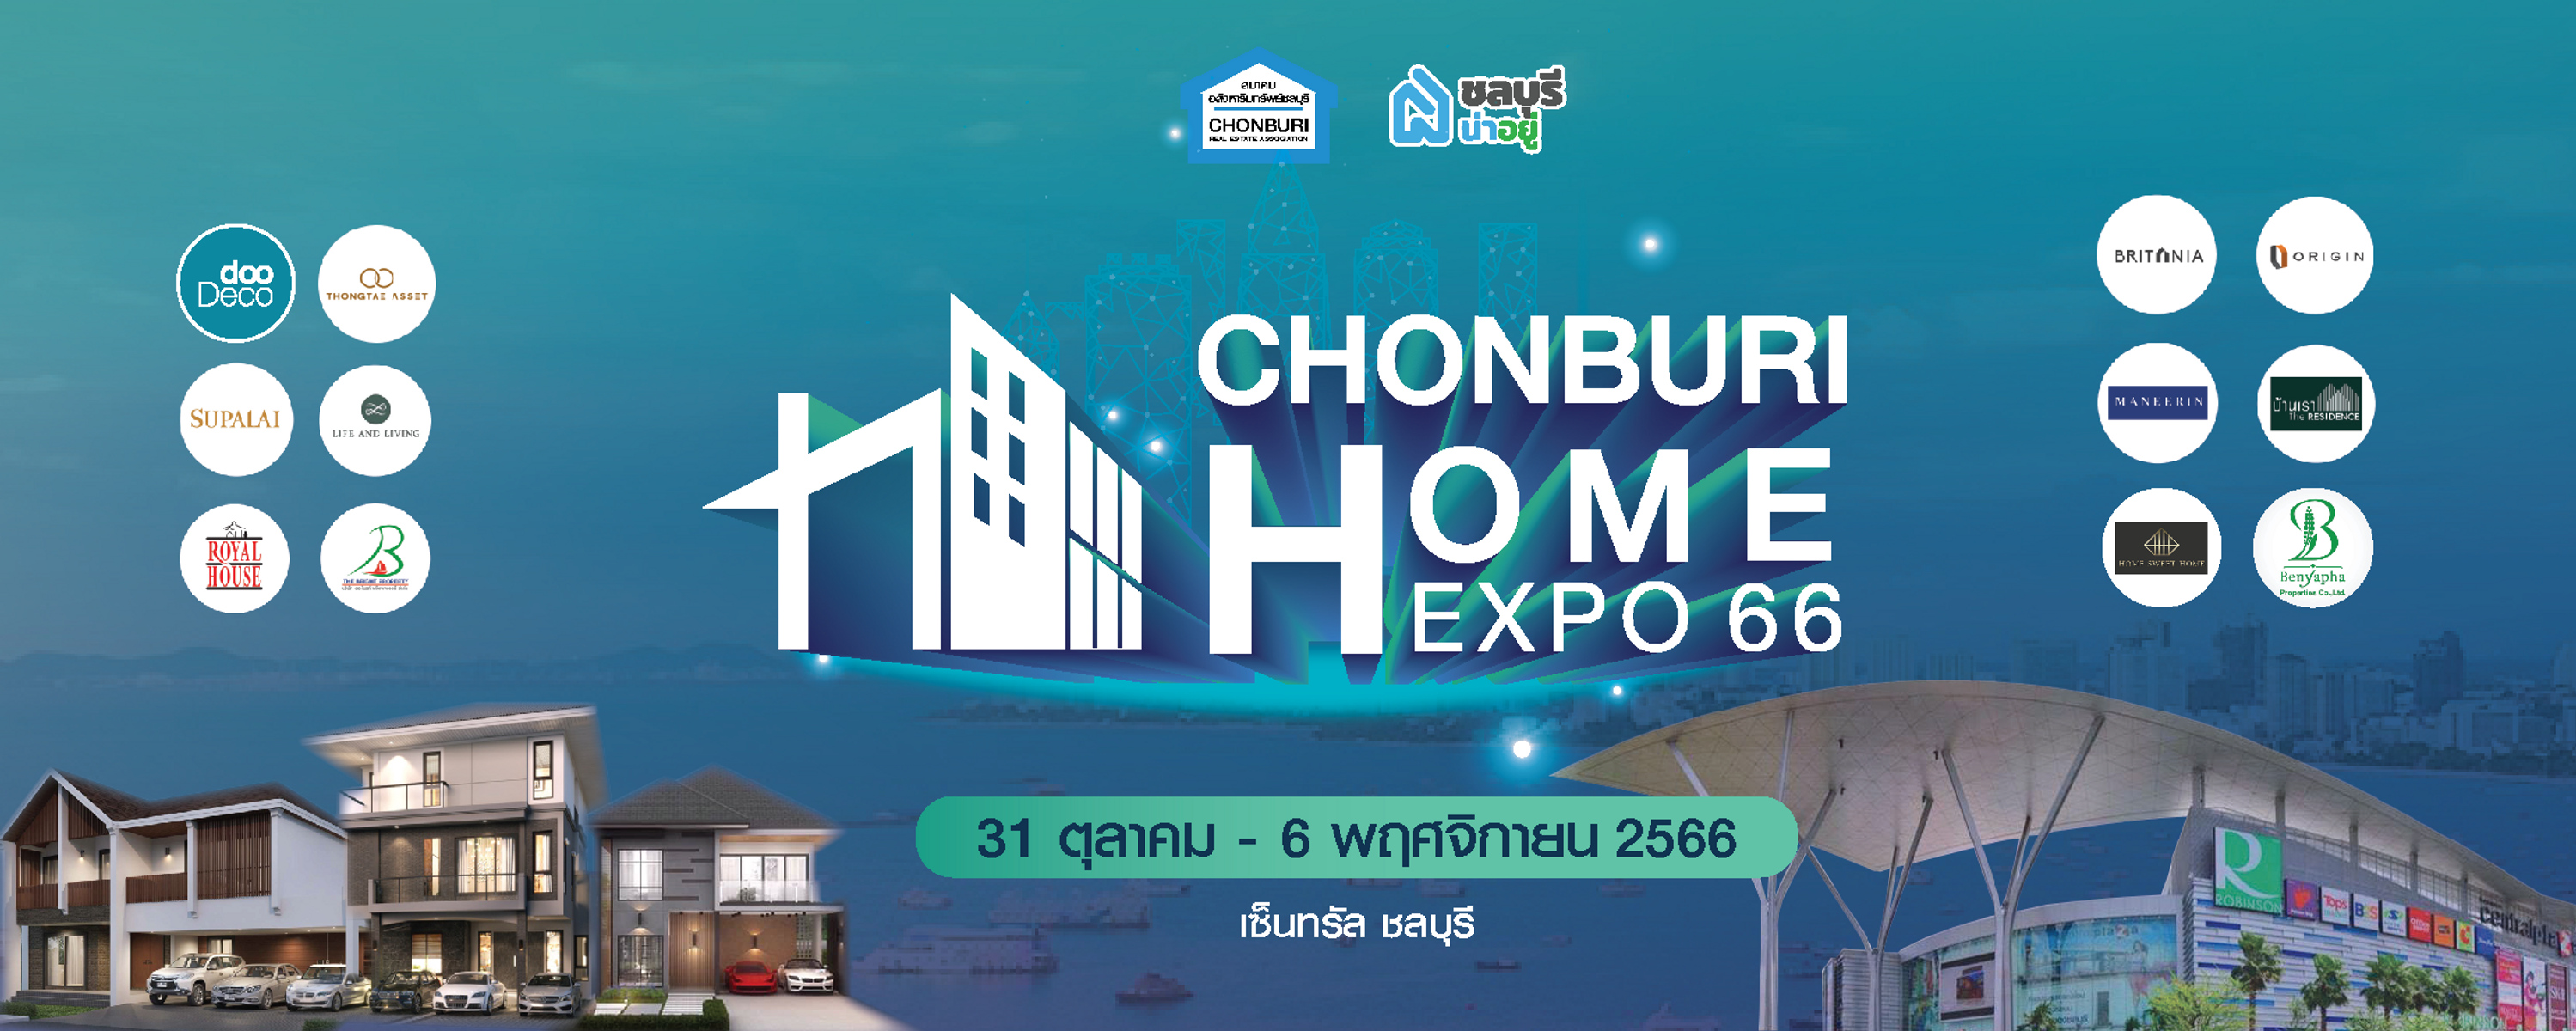 Banner B Chonburi Home Expo 66